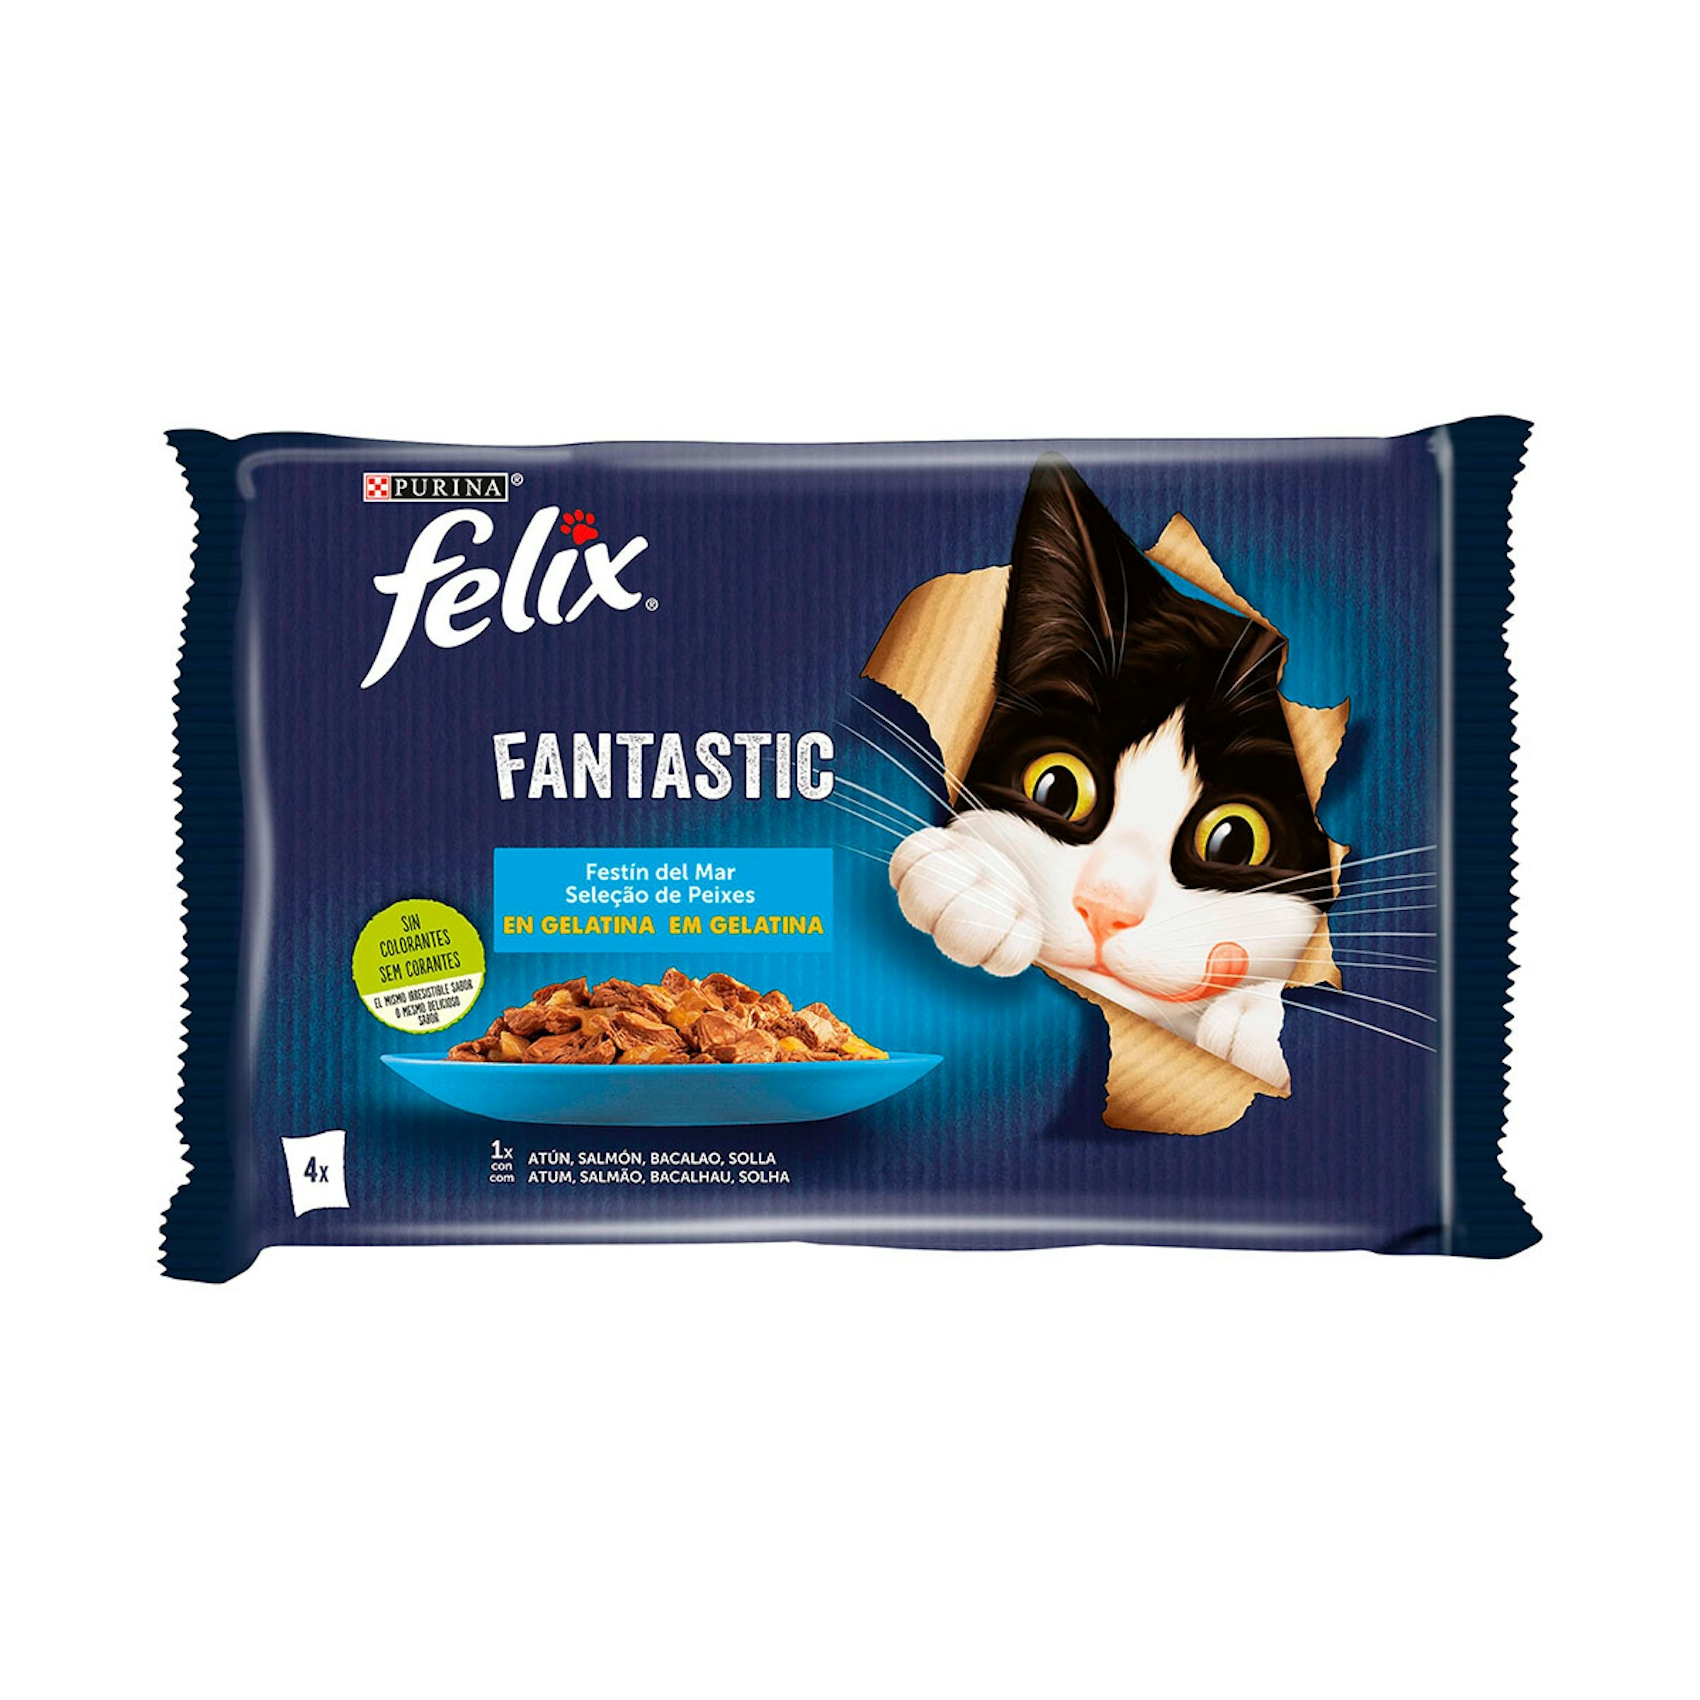 Alimento de gatos Festín del mar Felix Fantastic 4x85gr